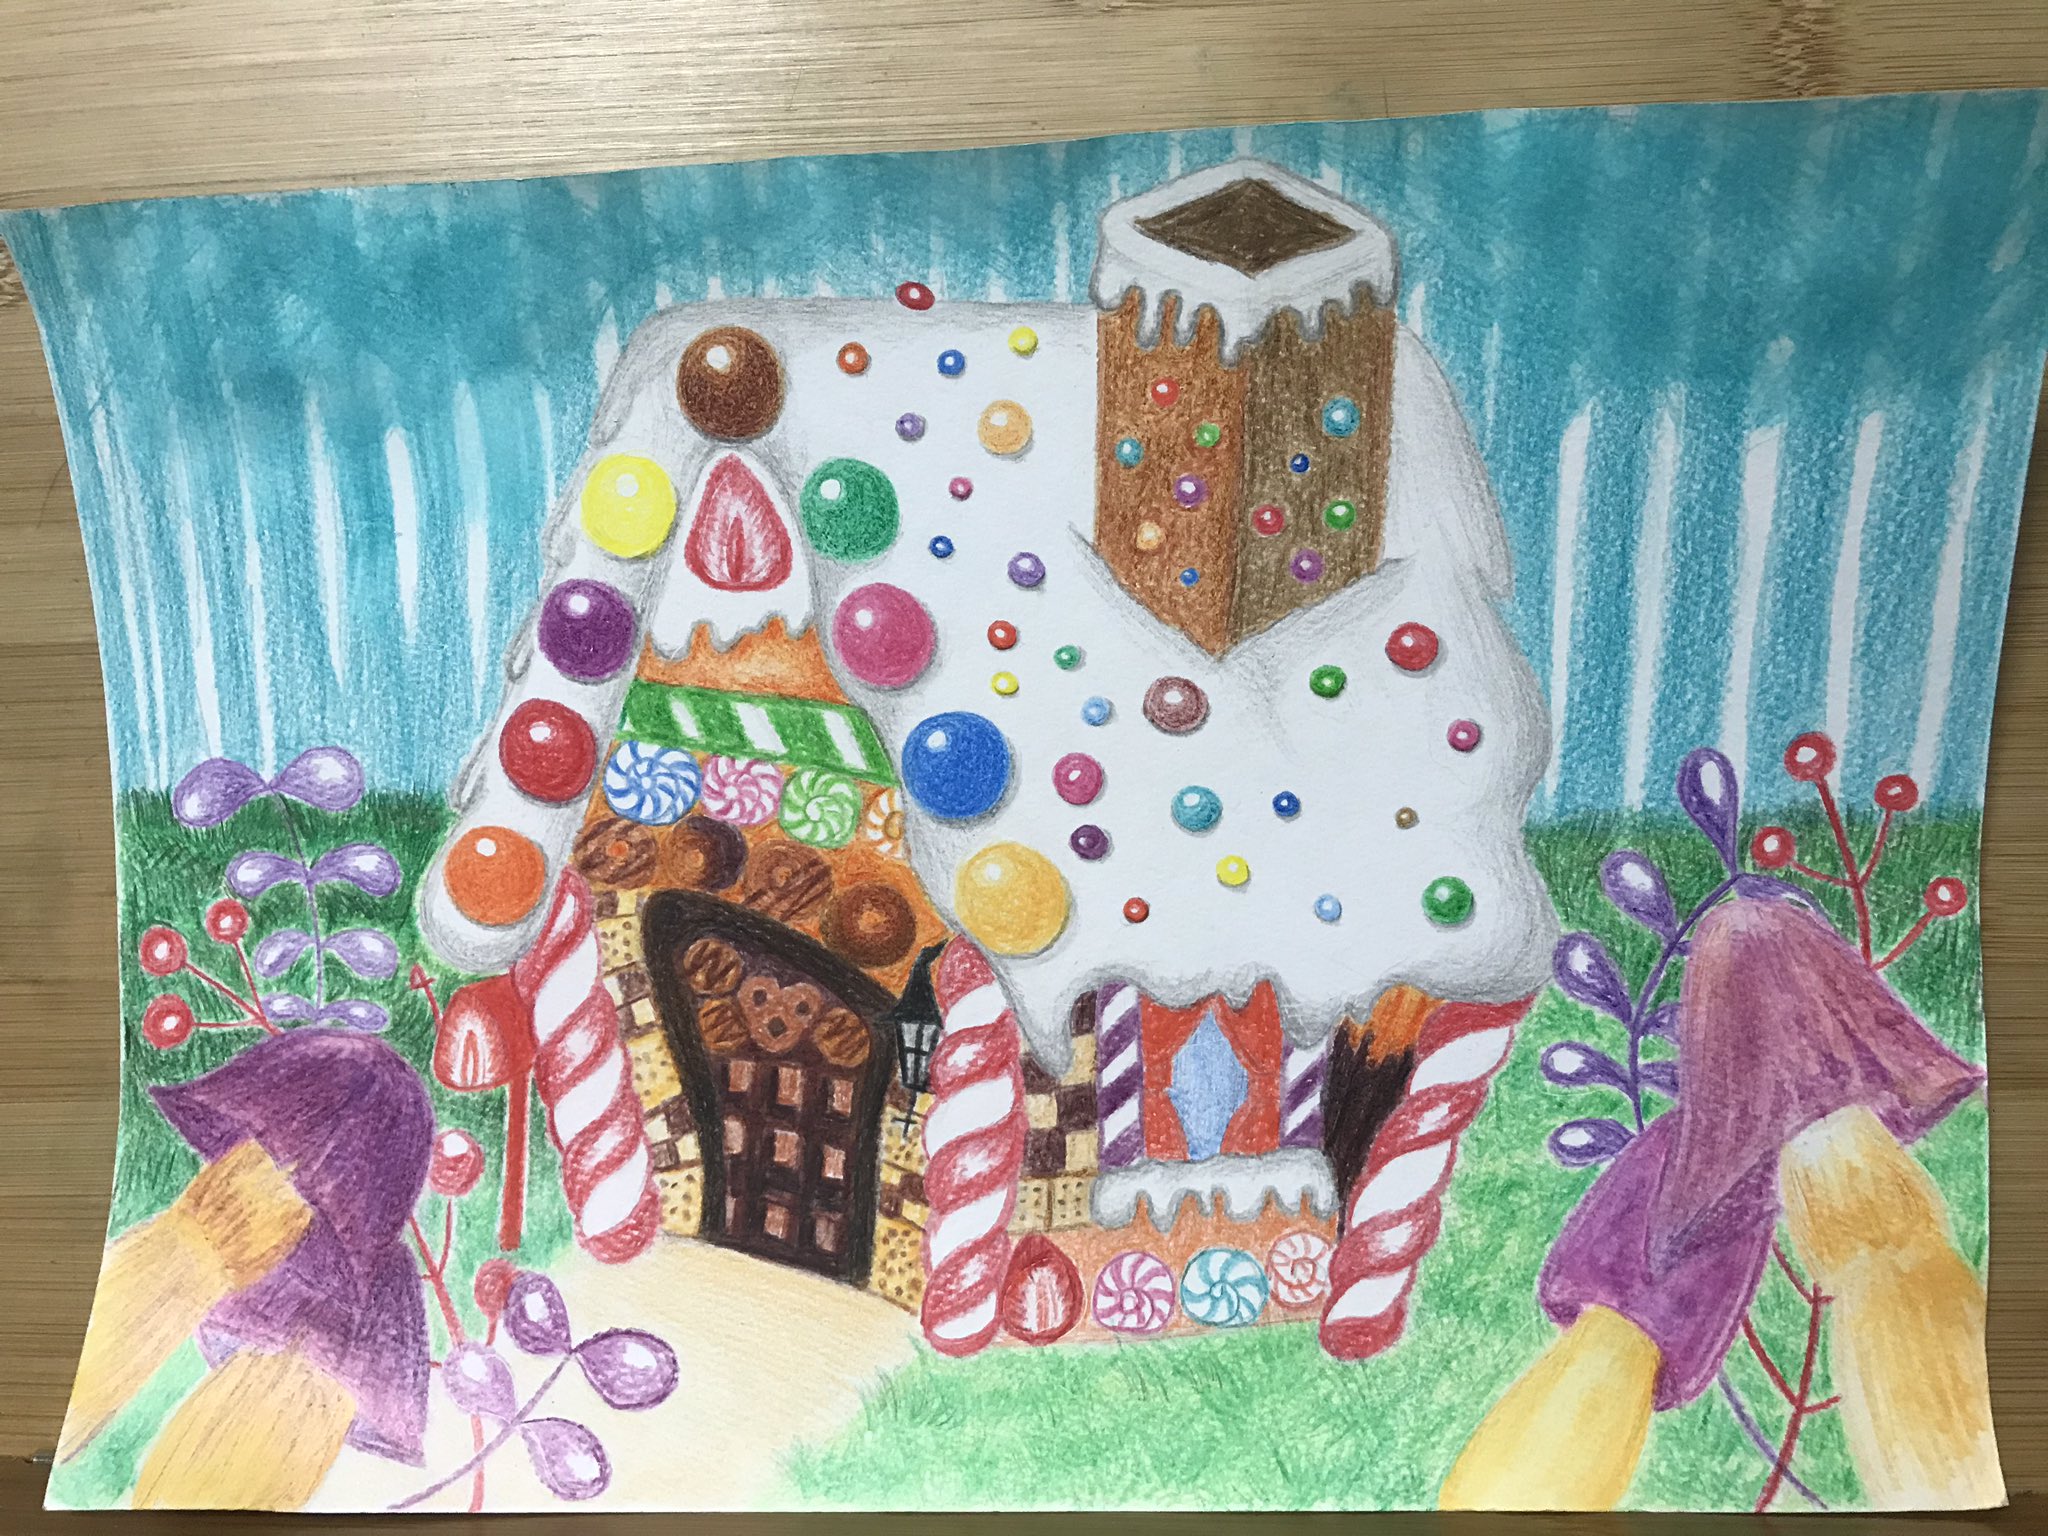 Dianne イラスト デジタルart 色鉛筆画 チョークアート 看板 お菓子の家二つ描きました どこからたべますか お菓子作り好きな人と繋がりたい お菓子の家 森 色鉛筆画 ハウス スイーツ スイーツハウス 甘いお菓子 イラスト お菓子の